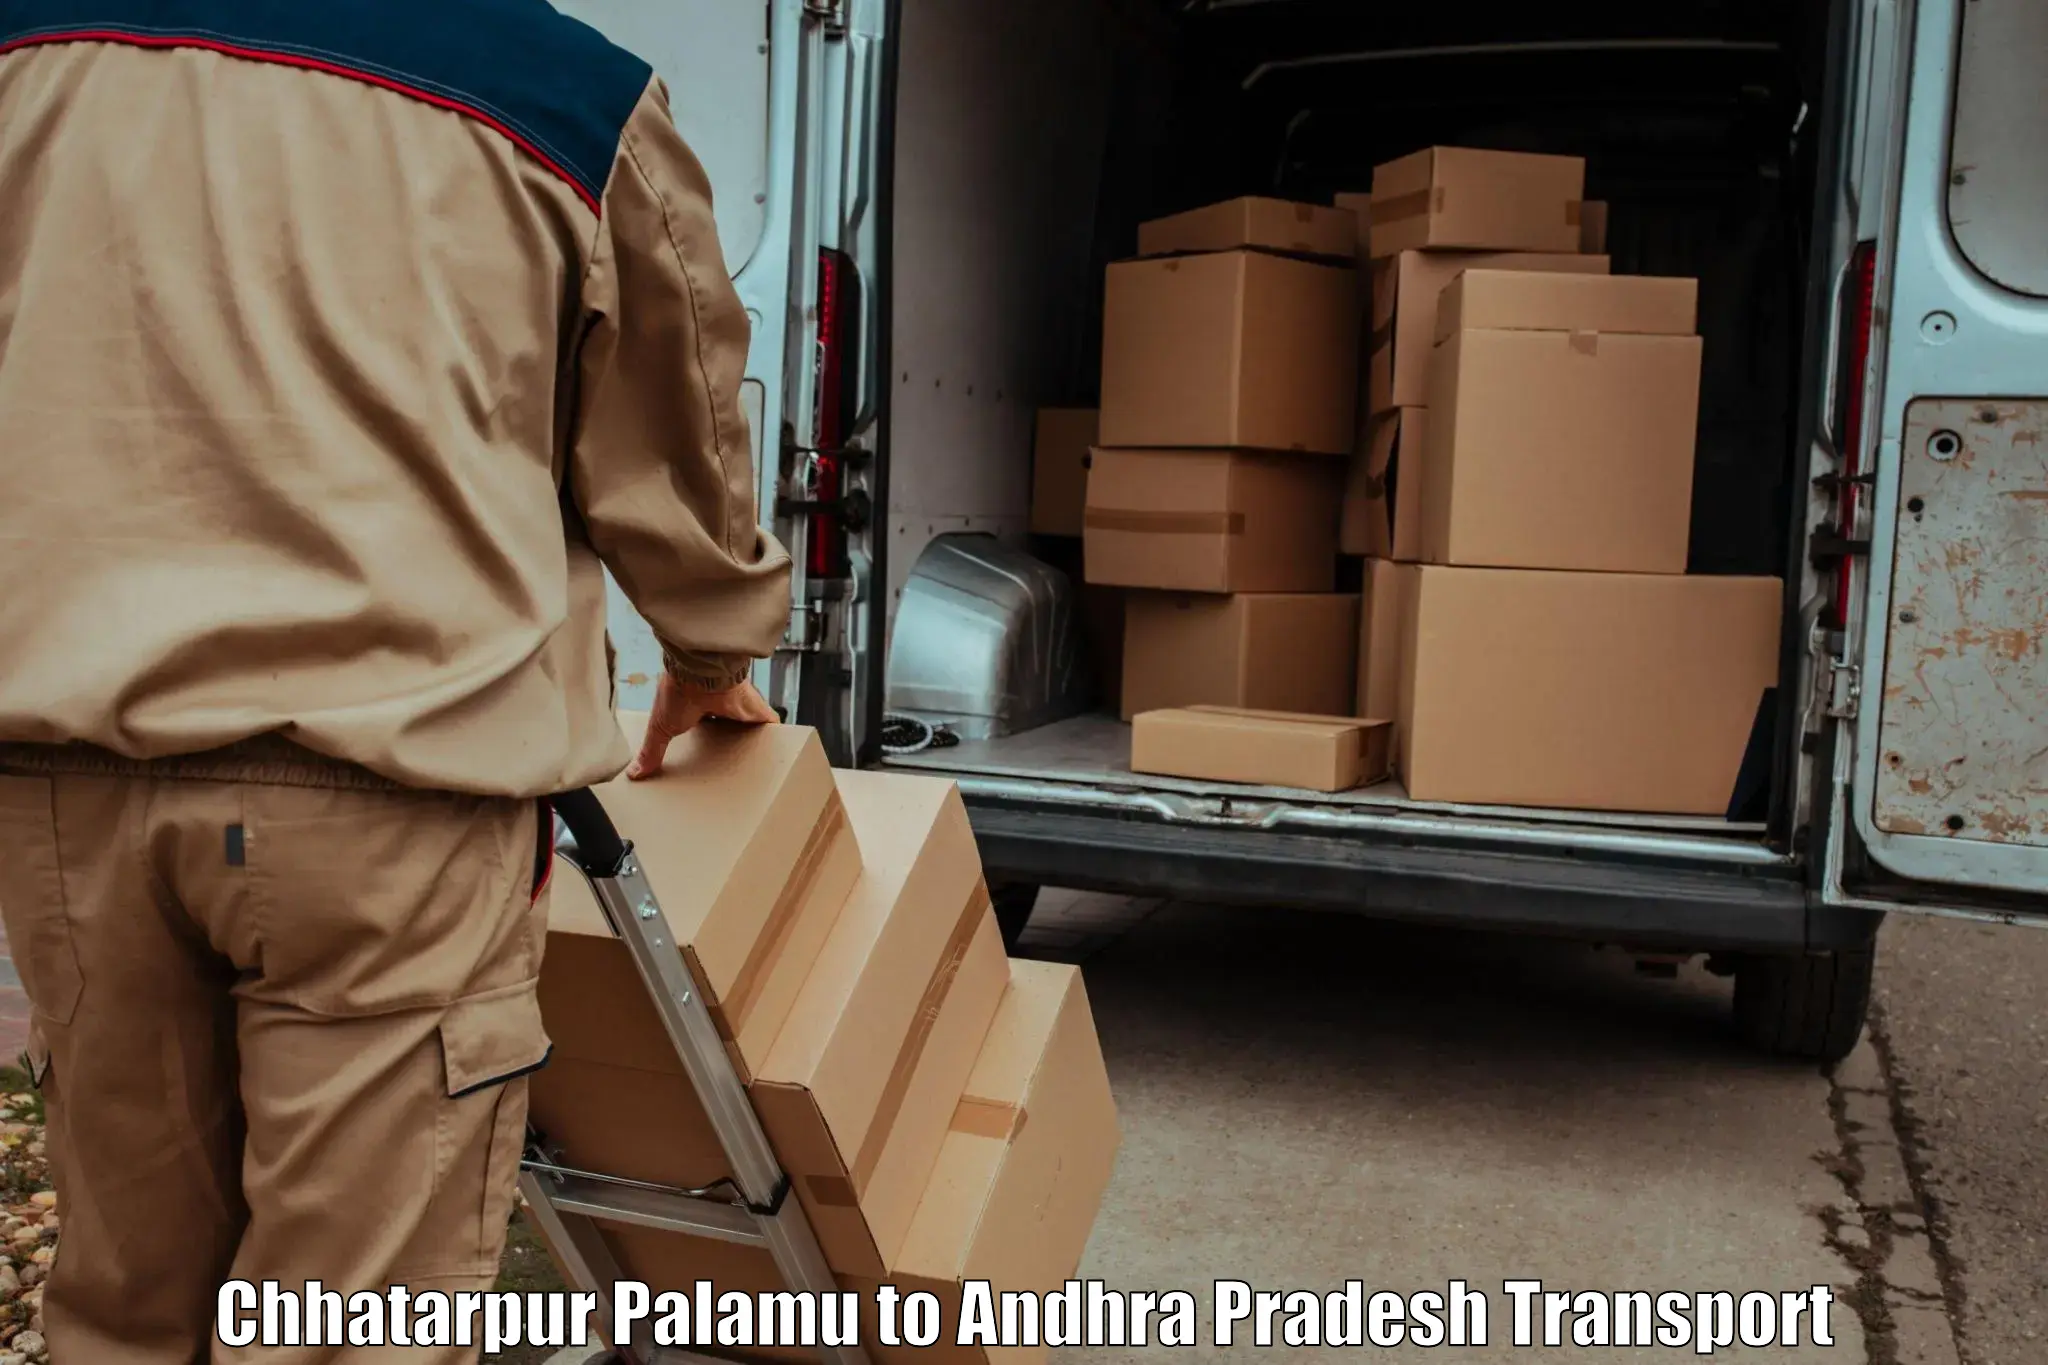 Goods delivery service Chhatarpur Palamu to Devarapalli